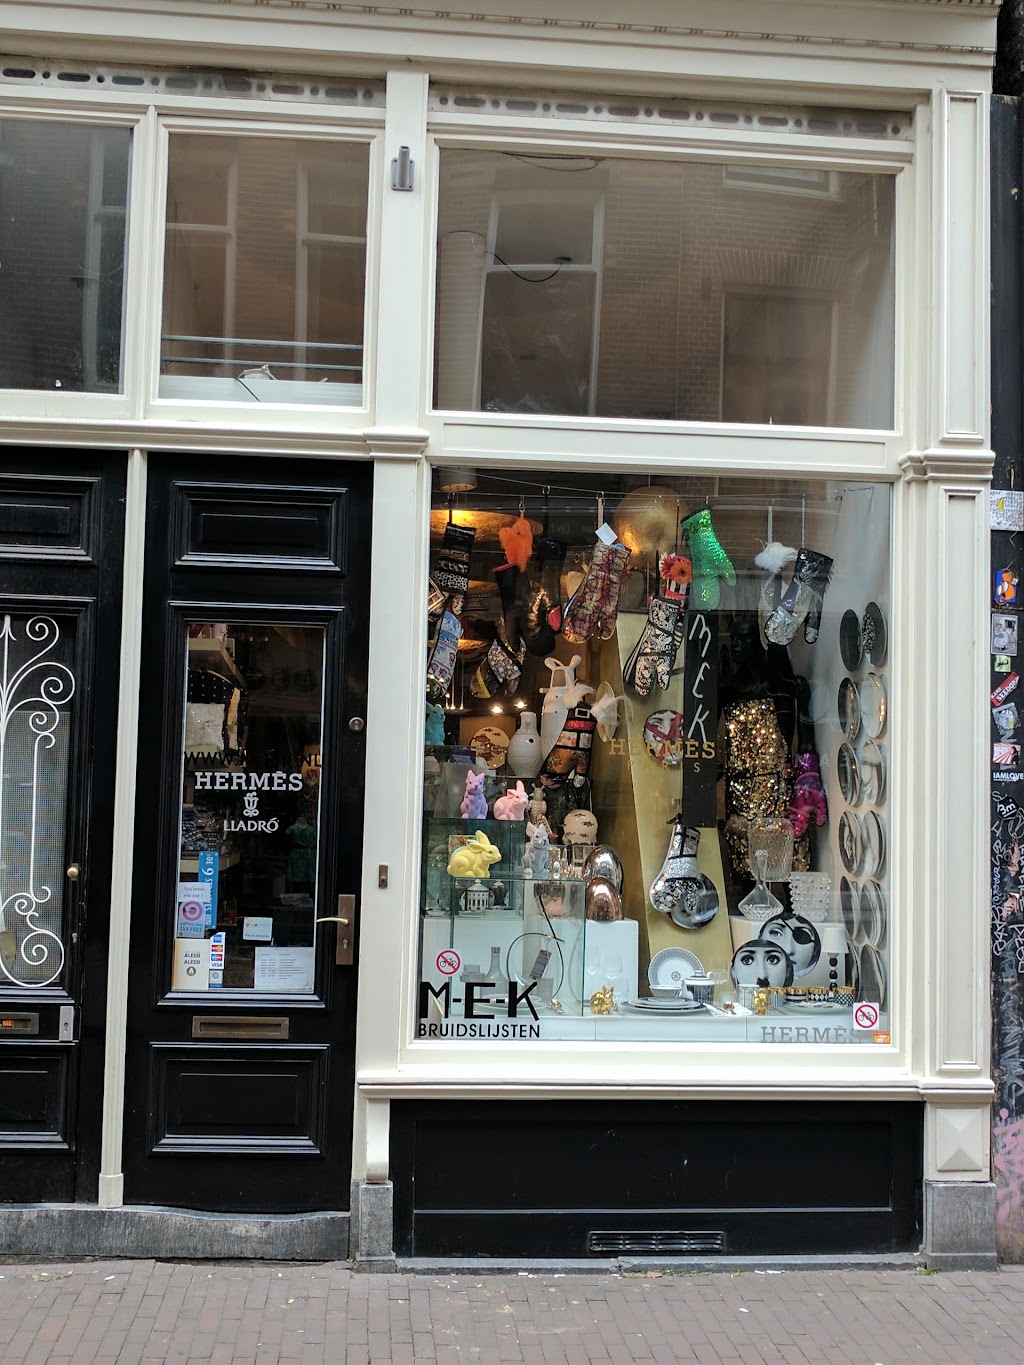 M.E.K. (Modern Exclusief Keramiek) | Hartenstraat 11, 1016 BZ Amsterdam, Netherlands | Phone: 020 638 1265